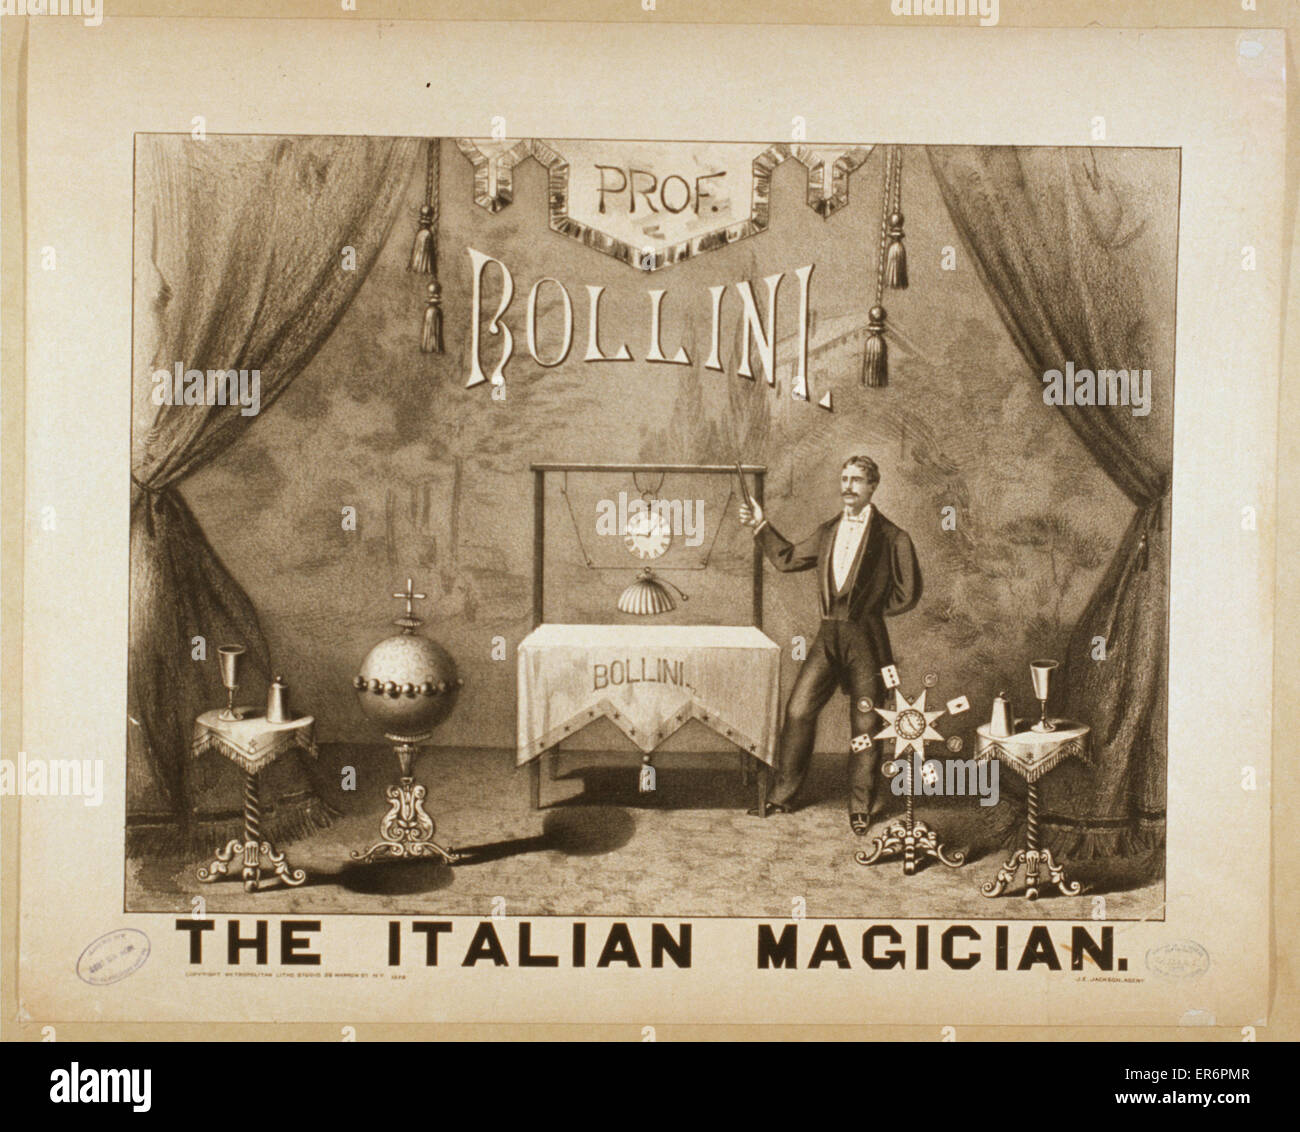 Prof. Bollini the Italian magician. Date c1879. Stock Photo